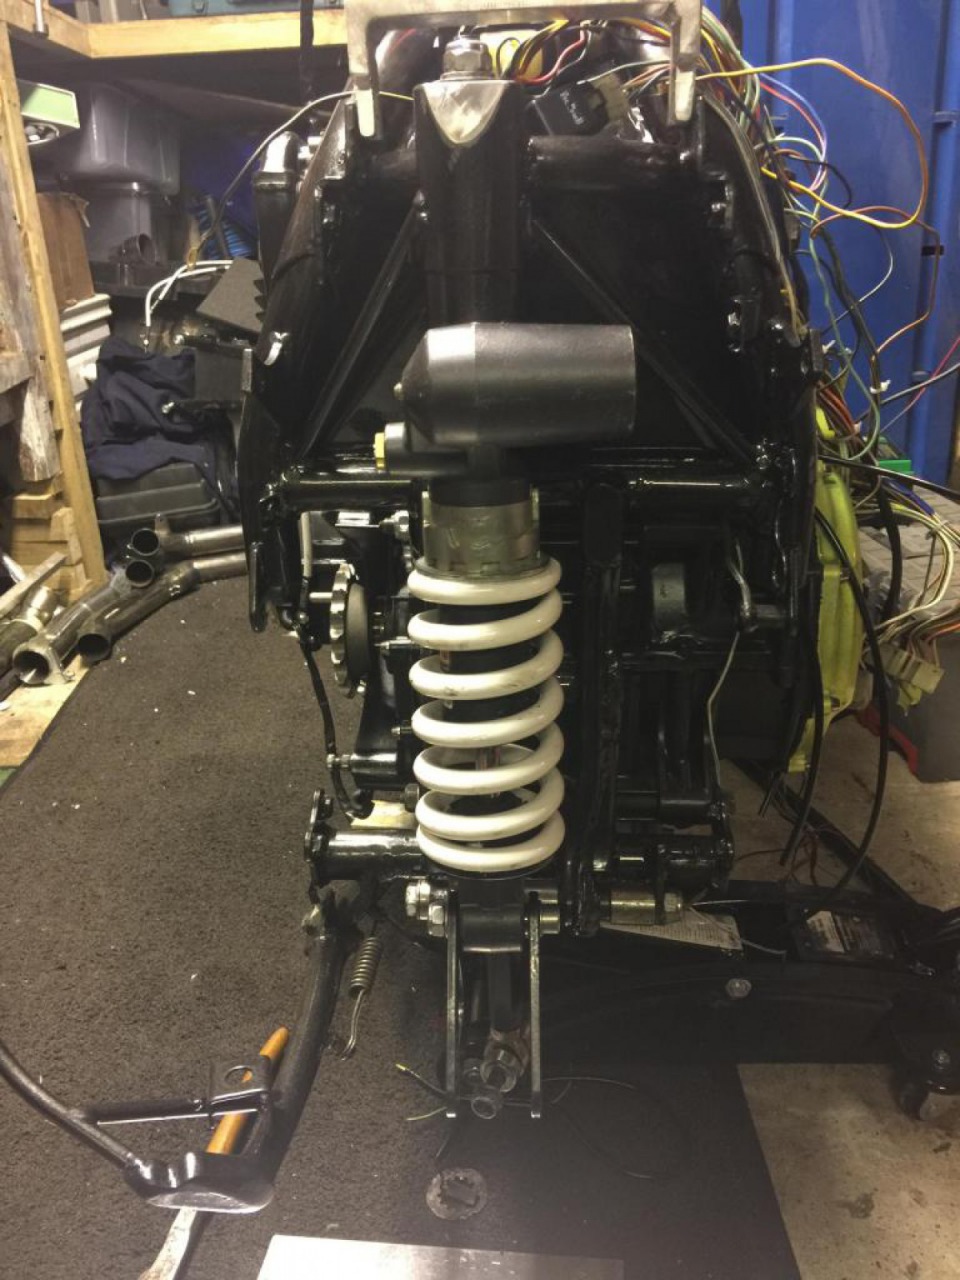 How i building GPZ900 (Part Kawasaki GPZ 900R on motoridersuniverse.com